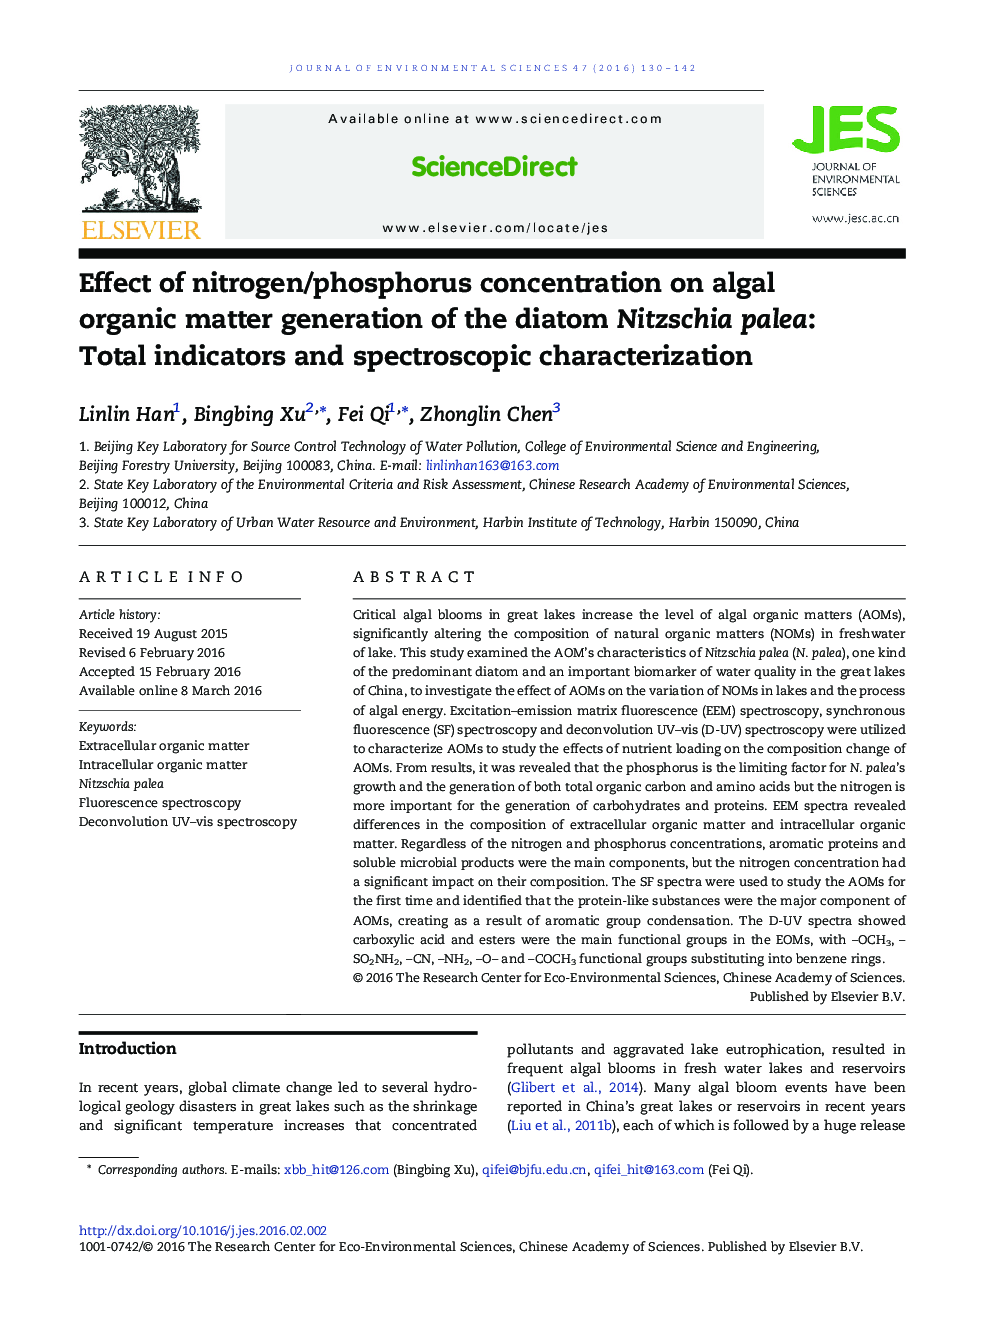 Effect of nitrogen/phosphorus concentration on algal organic matter generation of the diatom Nitzschia palea: Total indicators and spectroscopic characterization